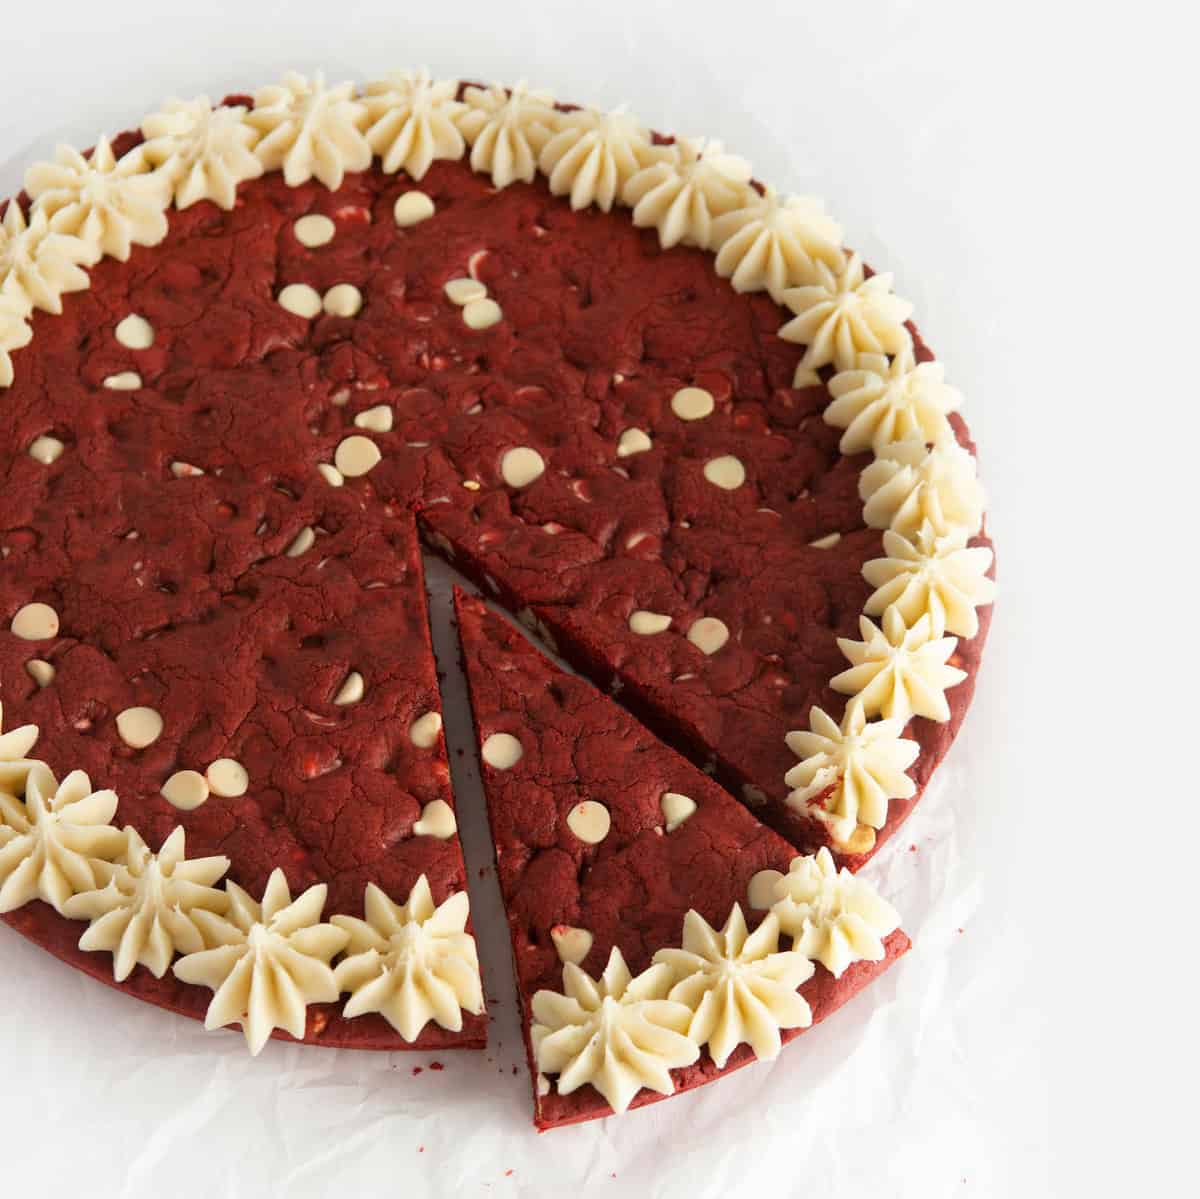 https://www.designeatrepeat.com/wp-content/uploads/2022/02/red-velvet-cookie-cake-featured-1.jpg